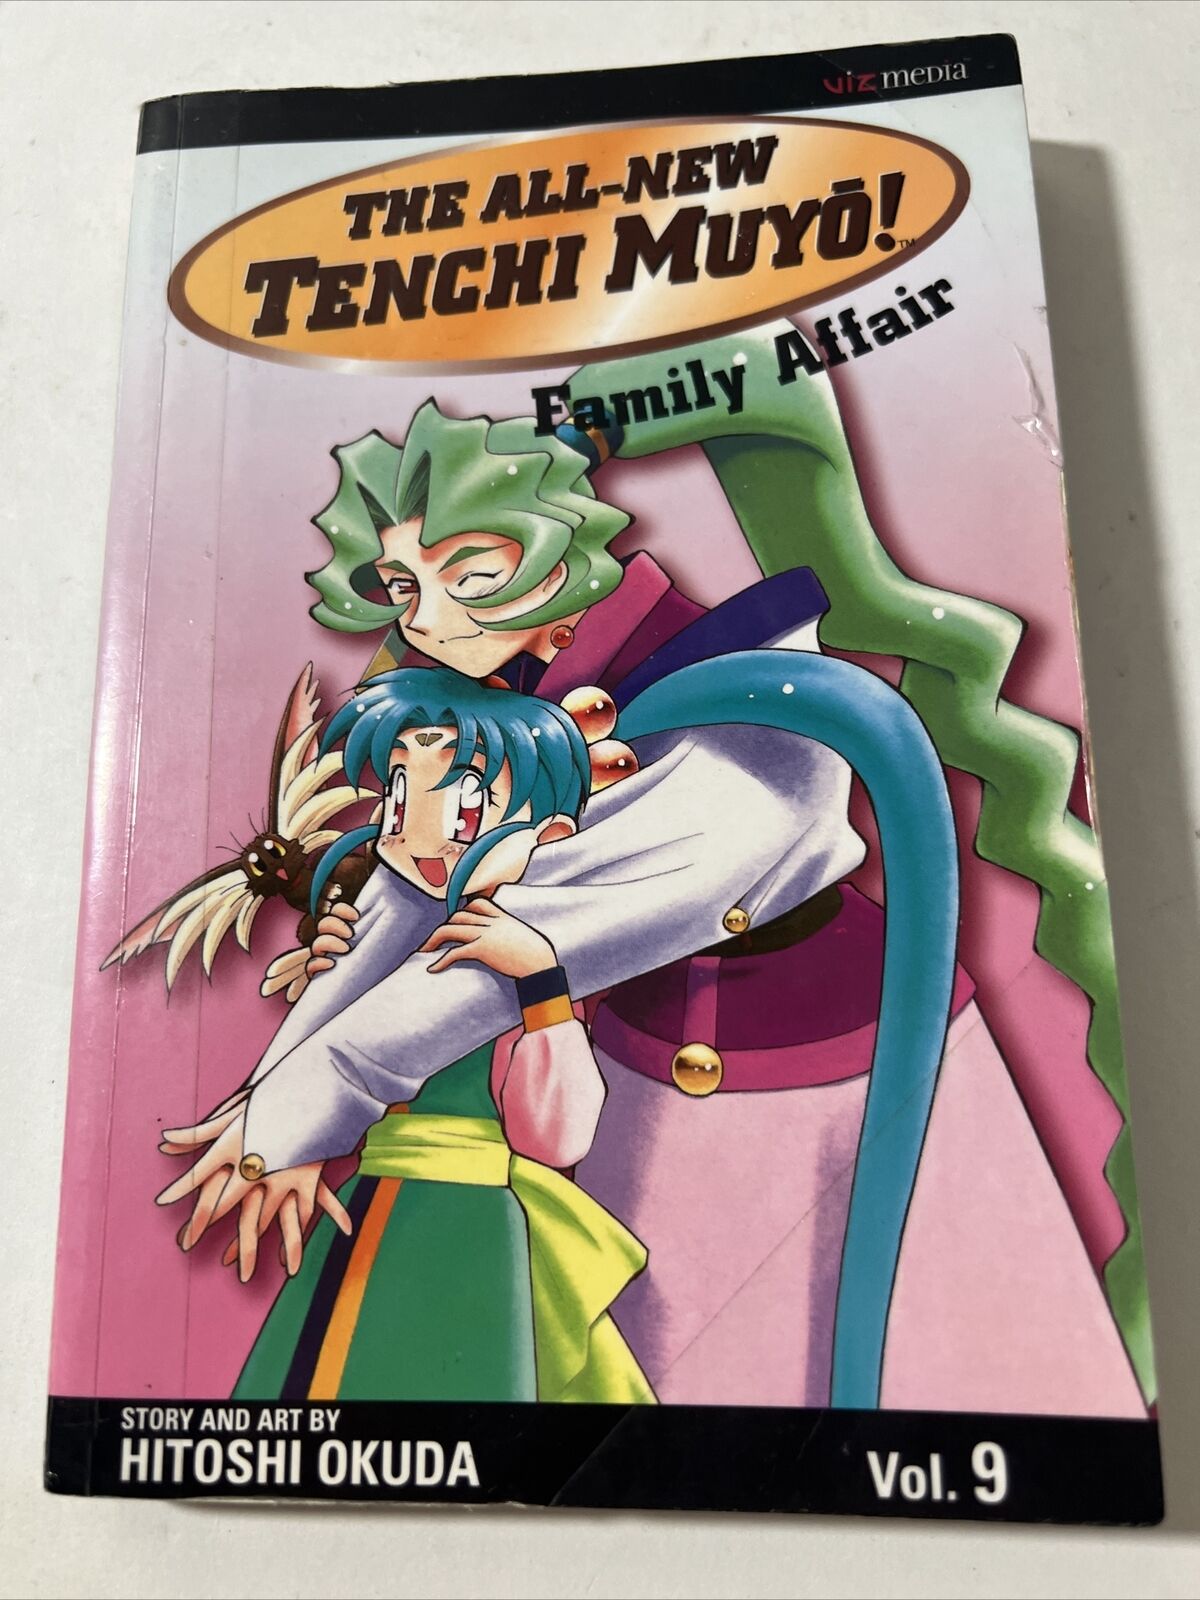 The All New Tenchi Muyo Vol 9 by Hitoshi Okuda VIZ Media 1st Print 2006 TPB Good